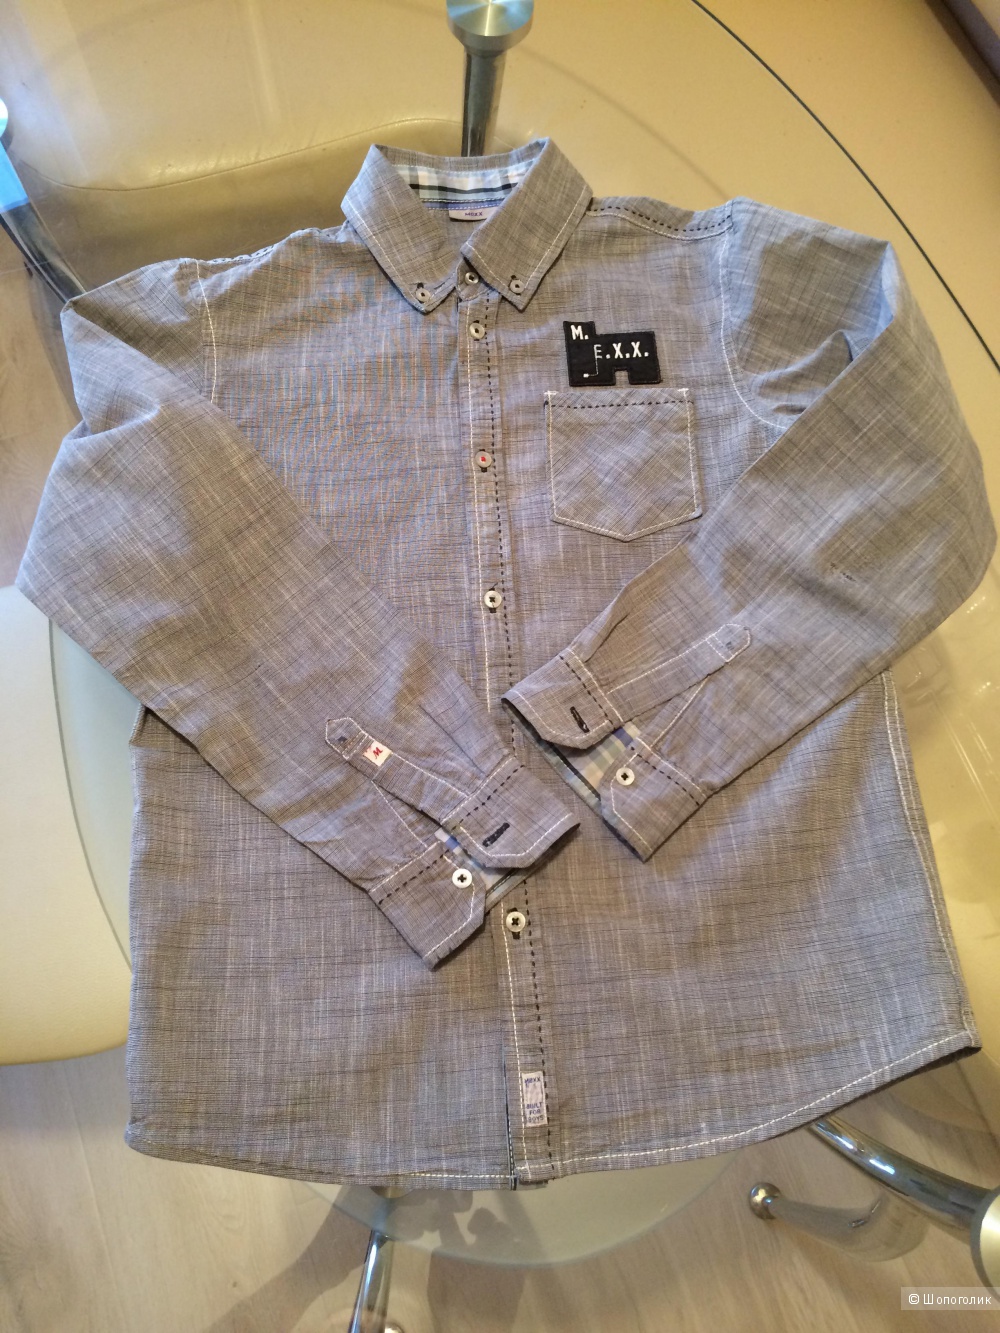 Комплект (рубашка,джемпер, футболка) Mexx для мальчика 134-146 см